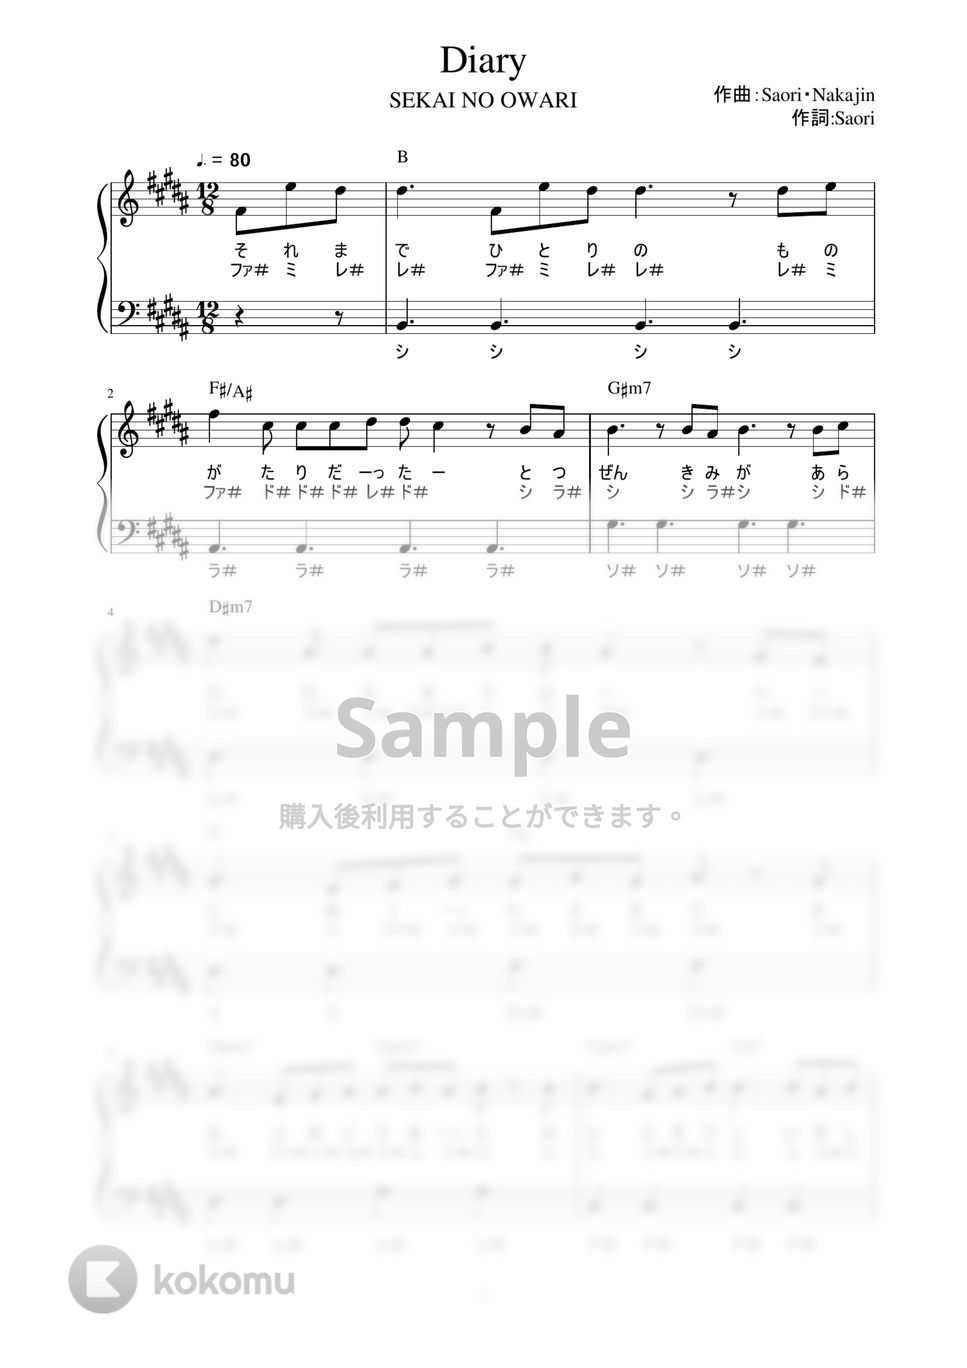 SEKAI NO OWARI - Diary (かんたん / 歌詞付き / ドレミ付き / 初心者) by piano.tokyo